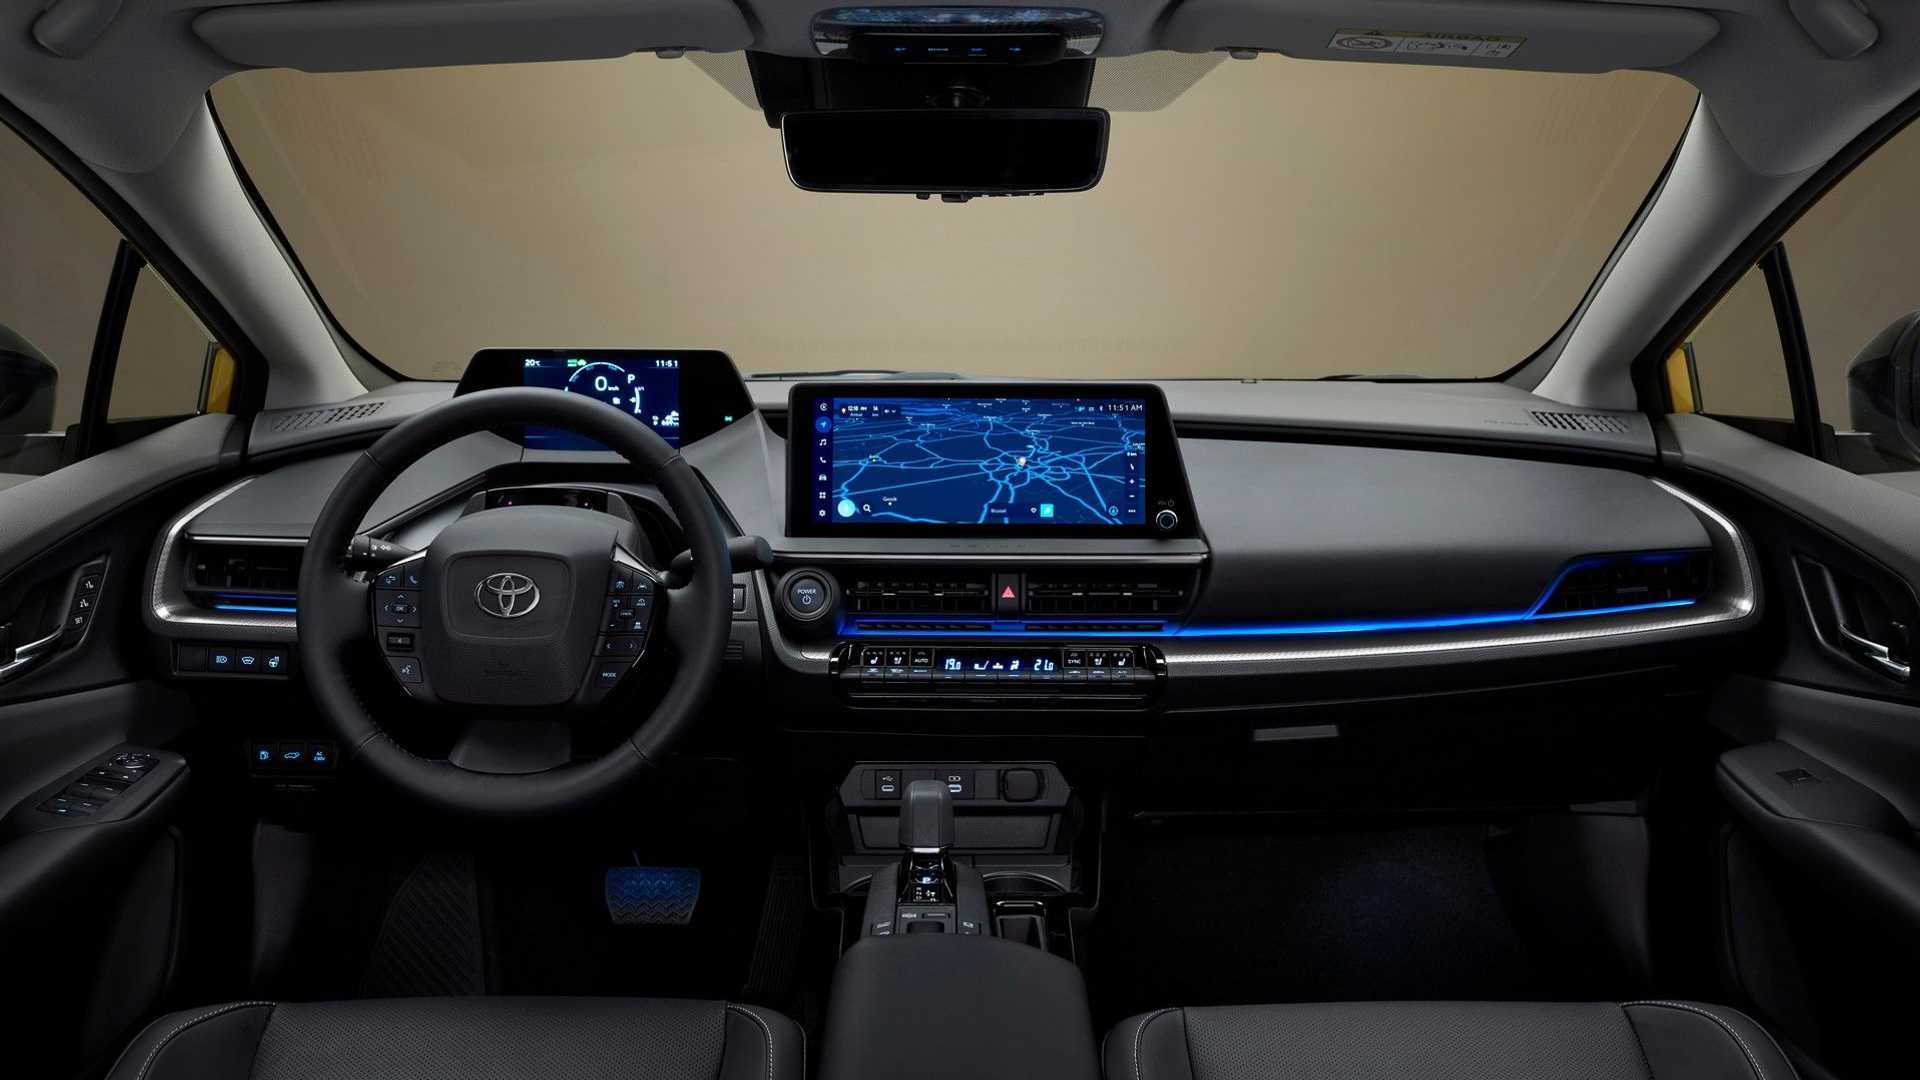 "Hybrid Reborn" All New 5th Gen Toyota Prius Revealed PakWheels Blog